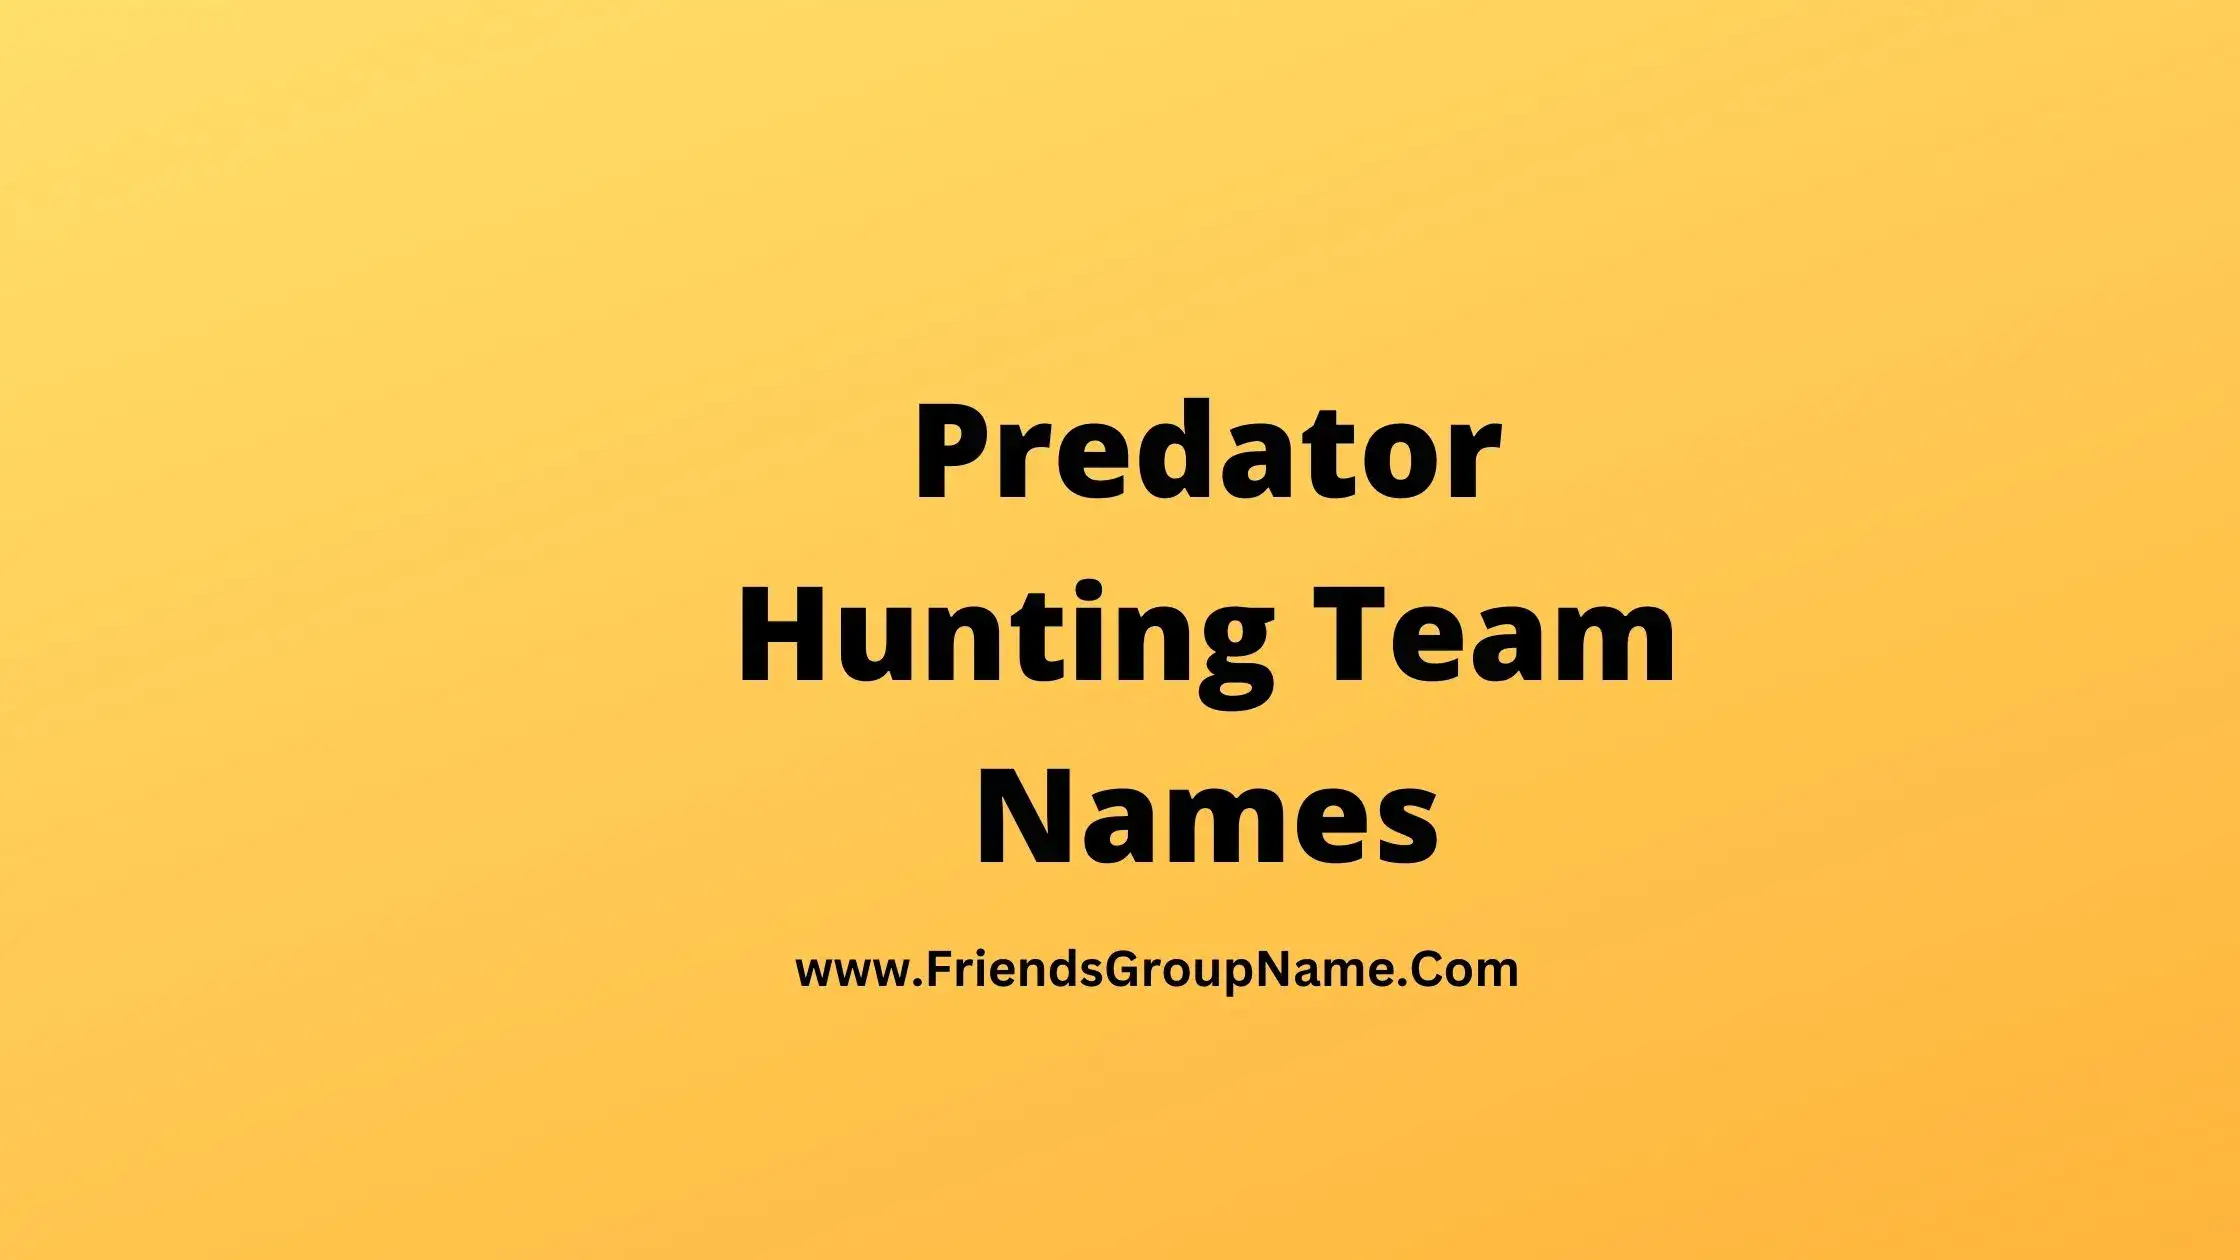 Predator Hunting Team Names